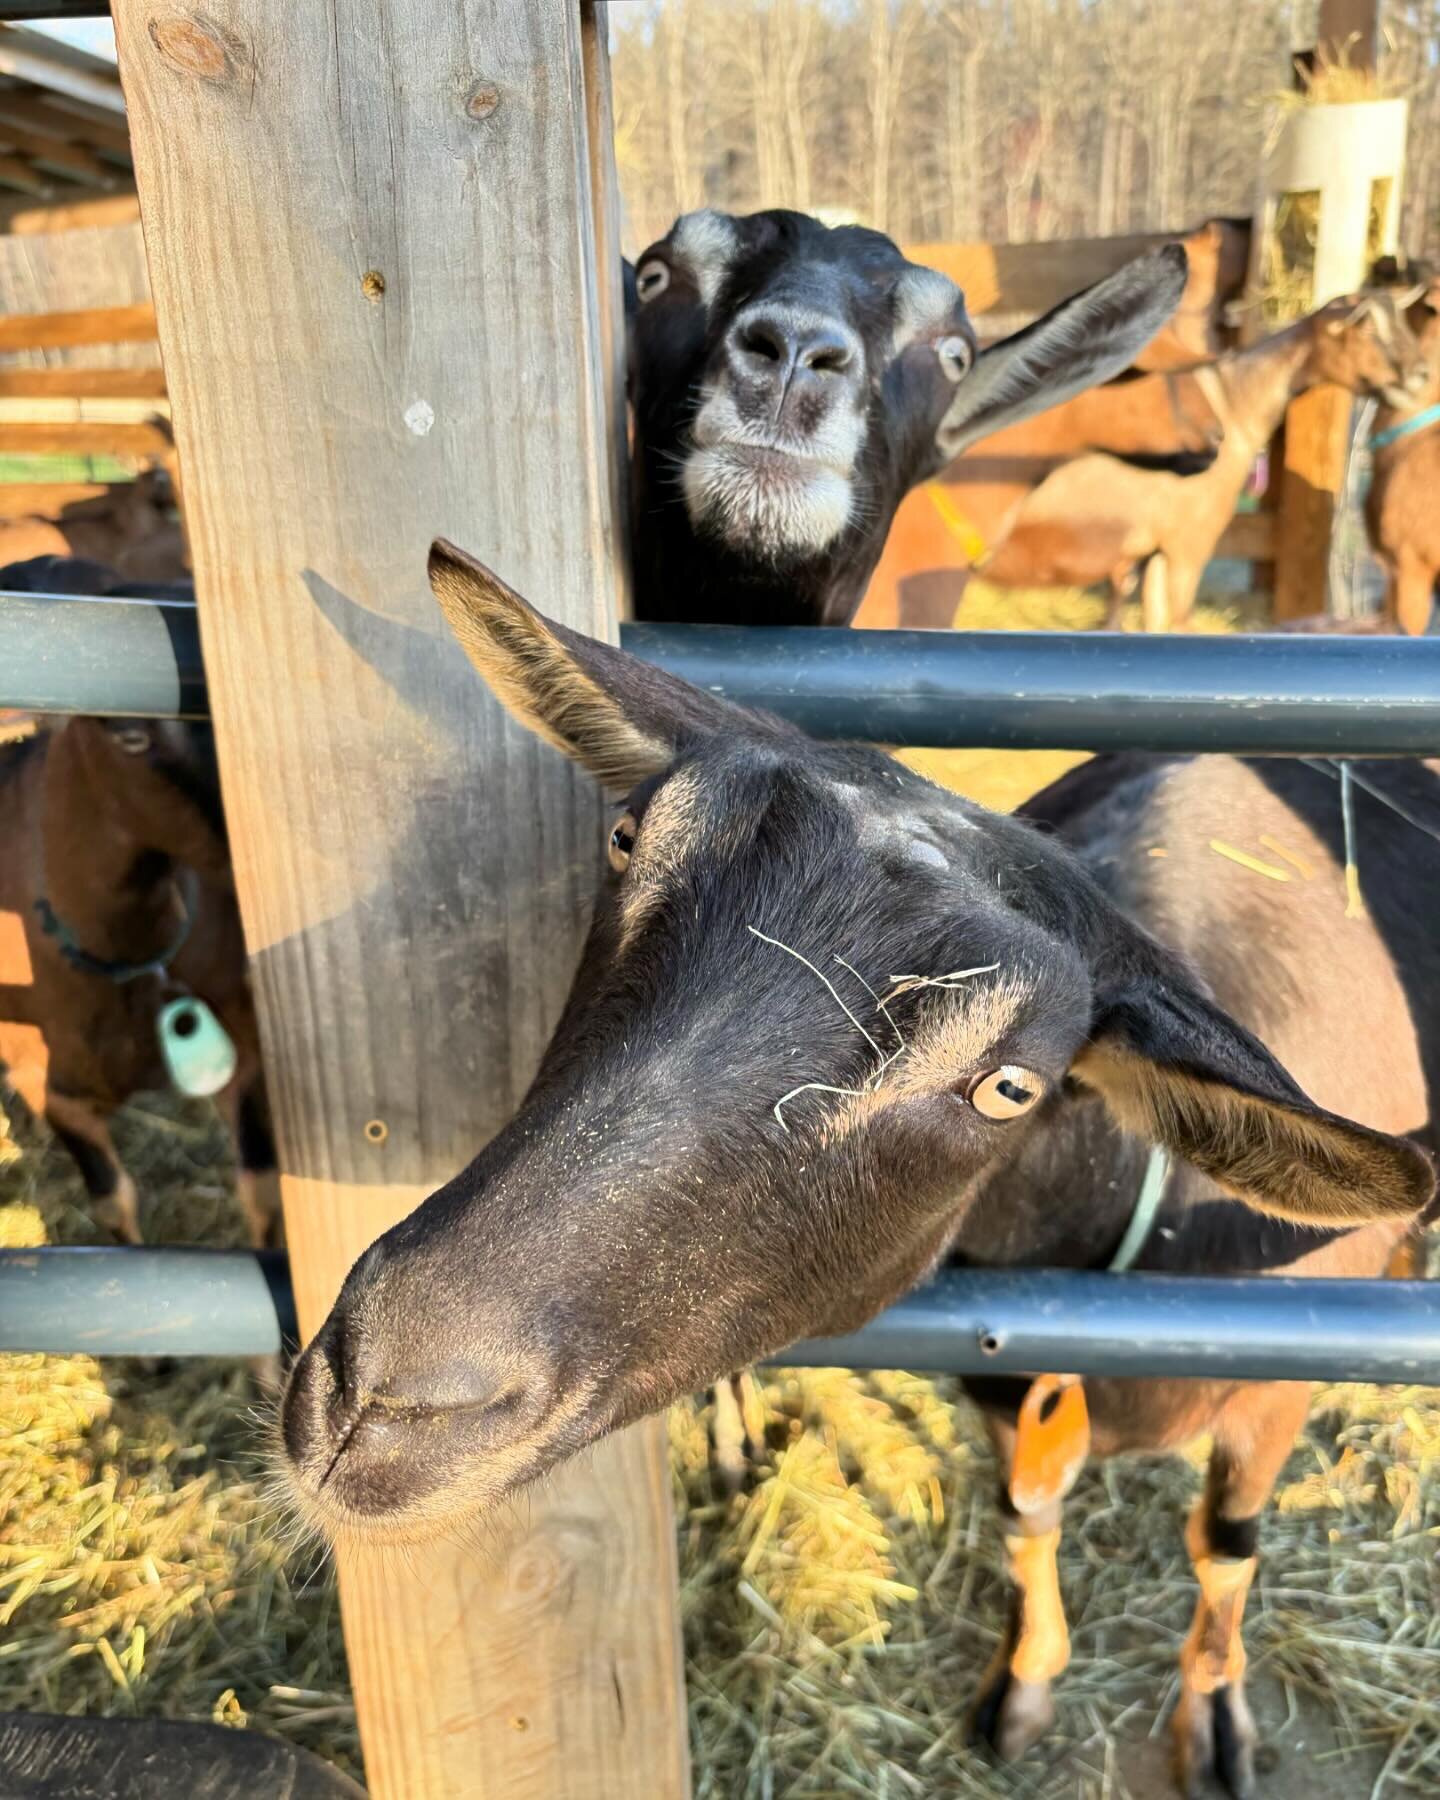 Sweet goats @boxcarrfarms #farmstead #farmsteadgoatsmilk #farmsteadgoatsmilkcheese #smallbusiness #localbusiness